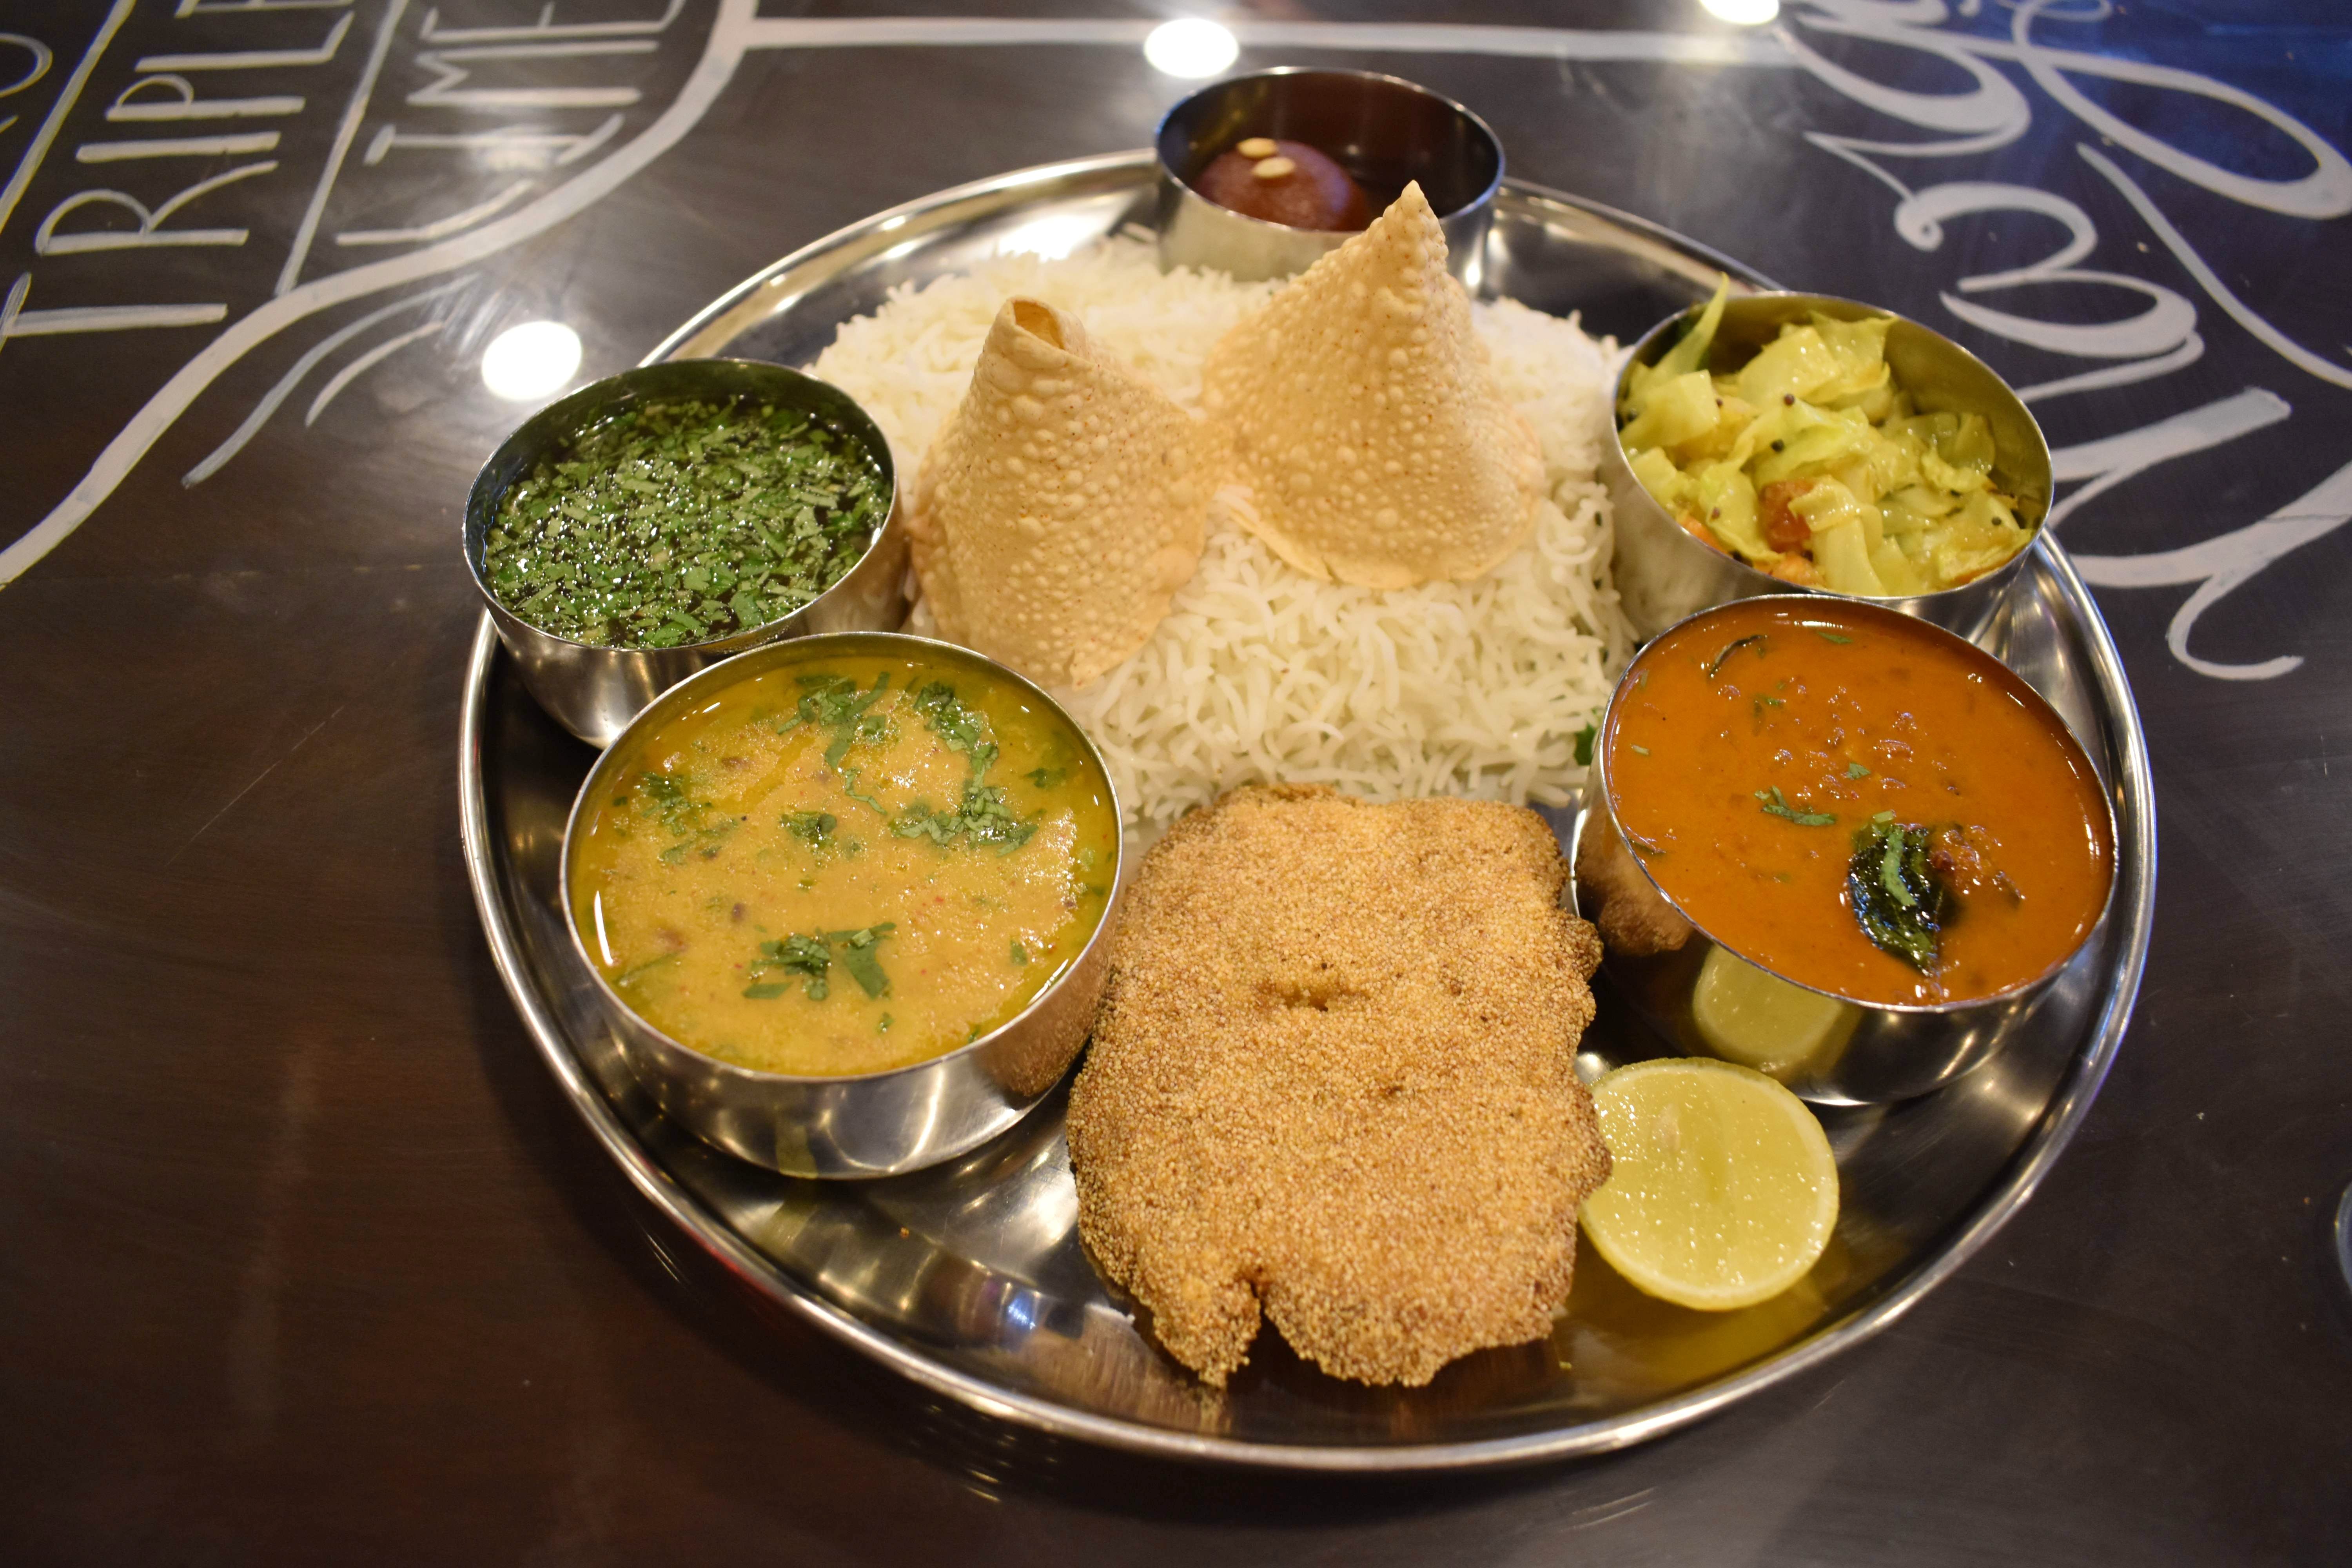 Dish,Food,Cuisine,Ingredient,Meal,Produce,Comfort food,Staple food,Indian cuisine,Tamil food